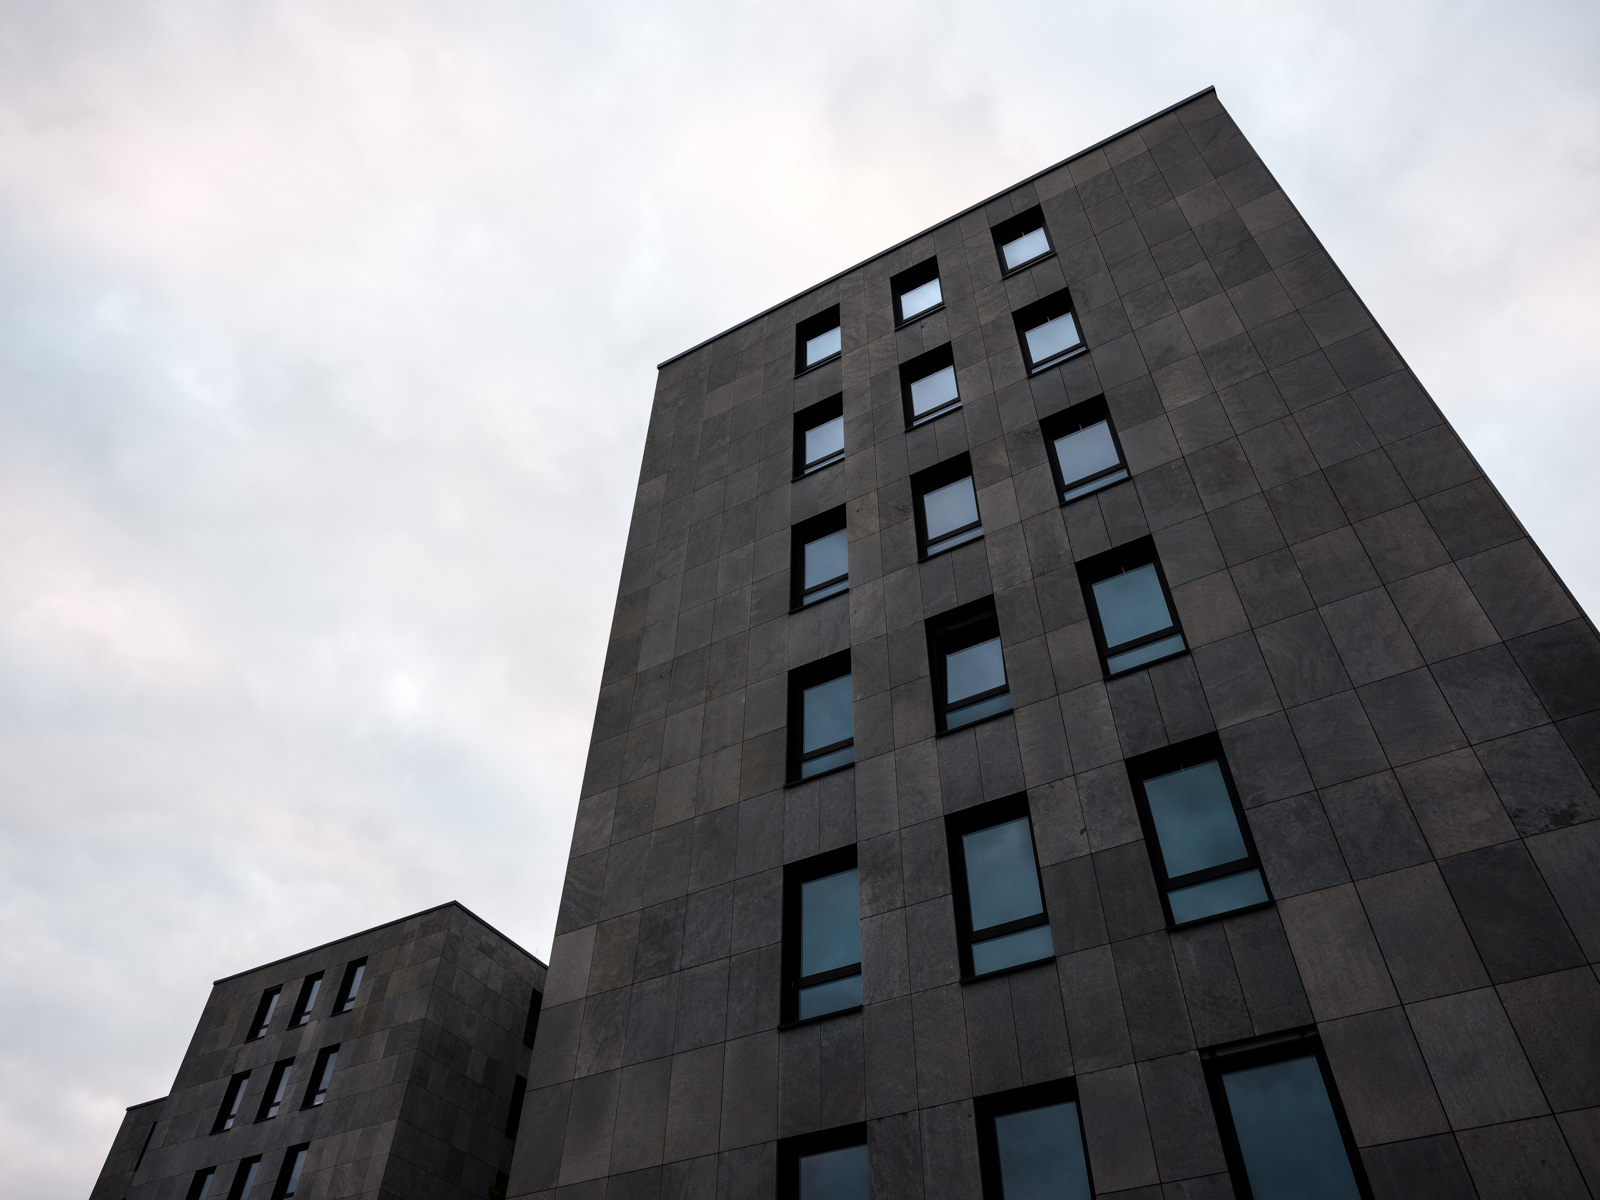 Dark facade. Office building located at  'Herforder Straße 73' in July 2020 (Bielefeld, Germany).